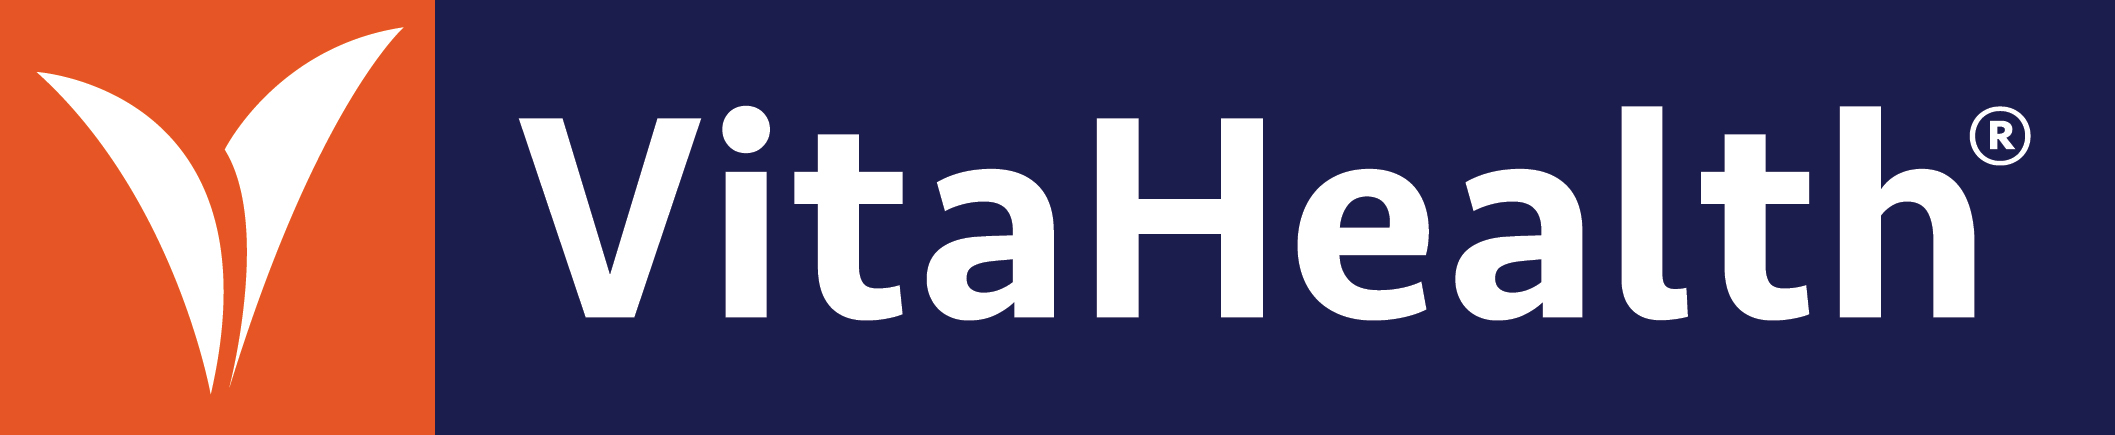 VitaHealth New Logo-01 with R.jpg